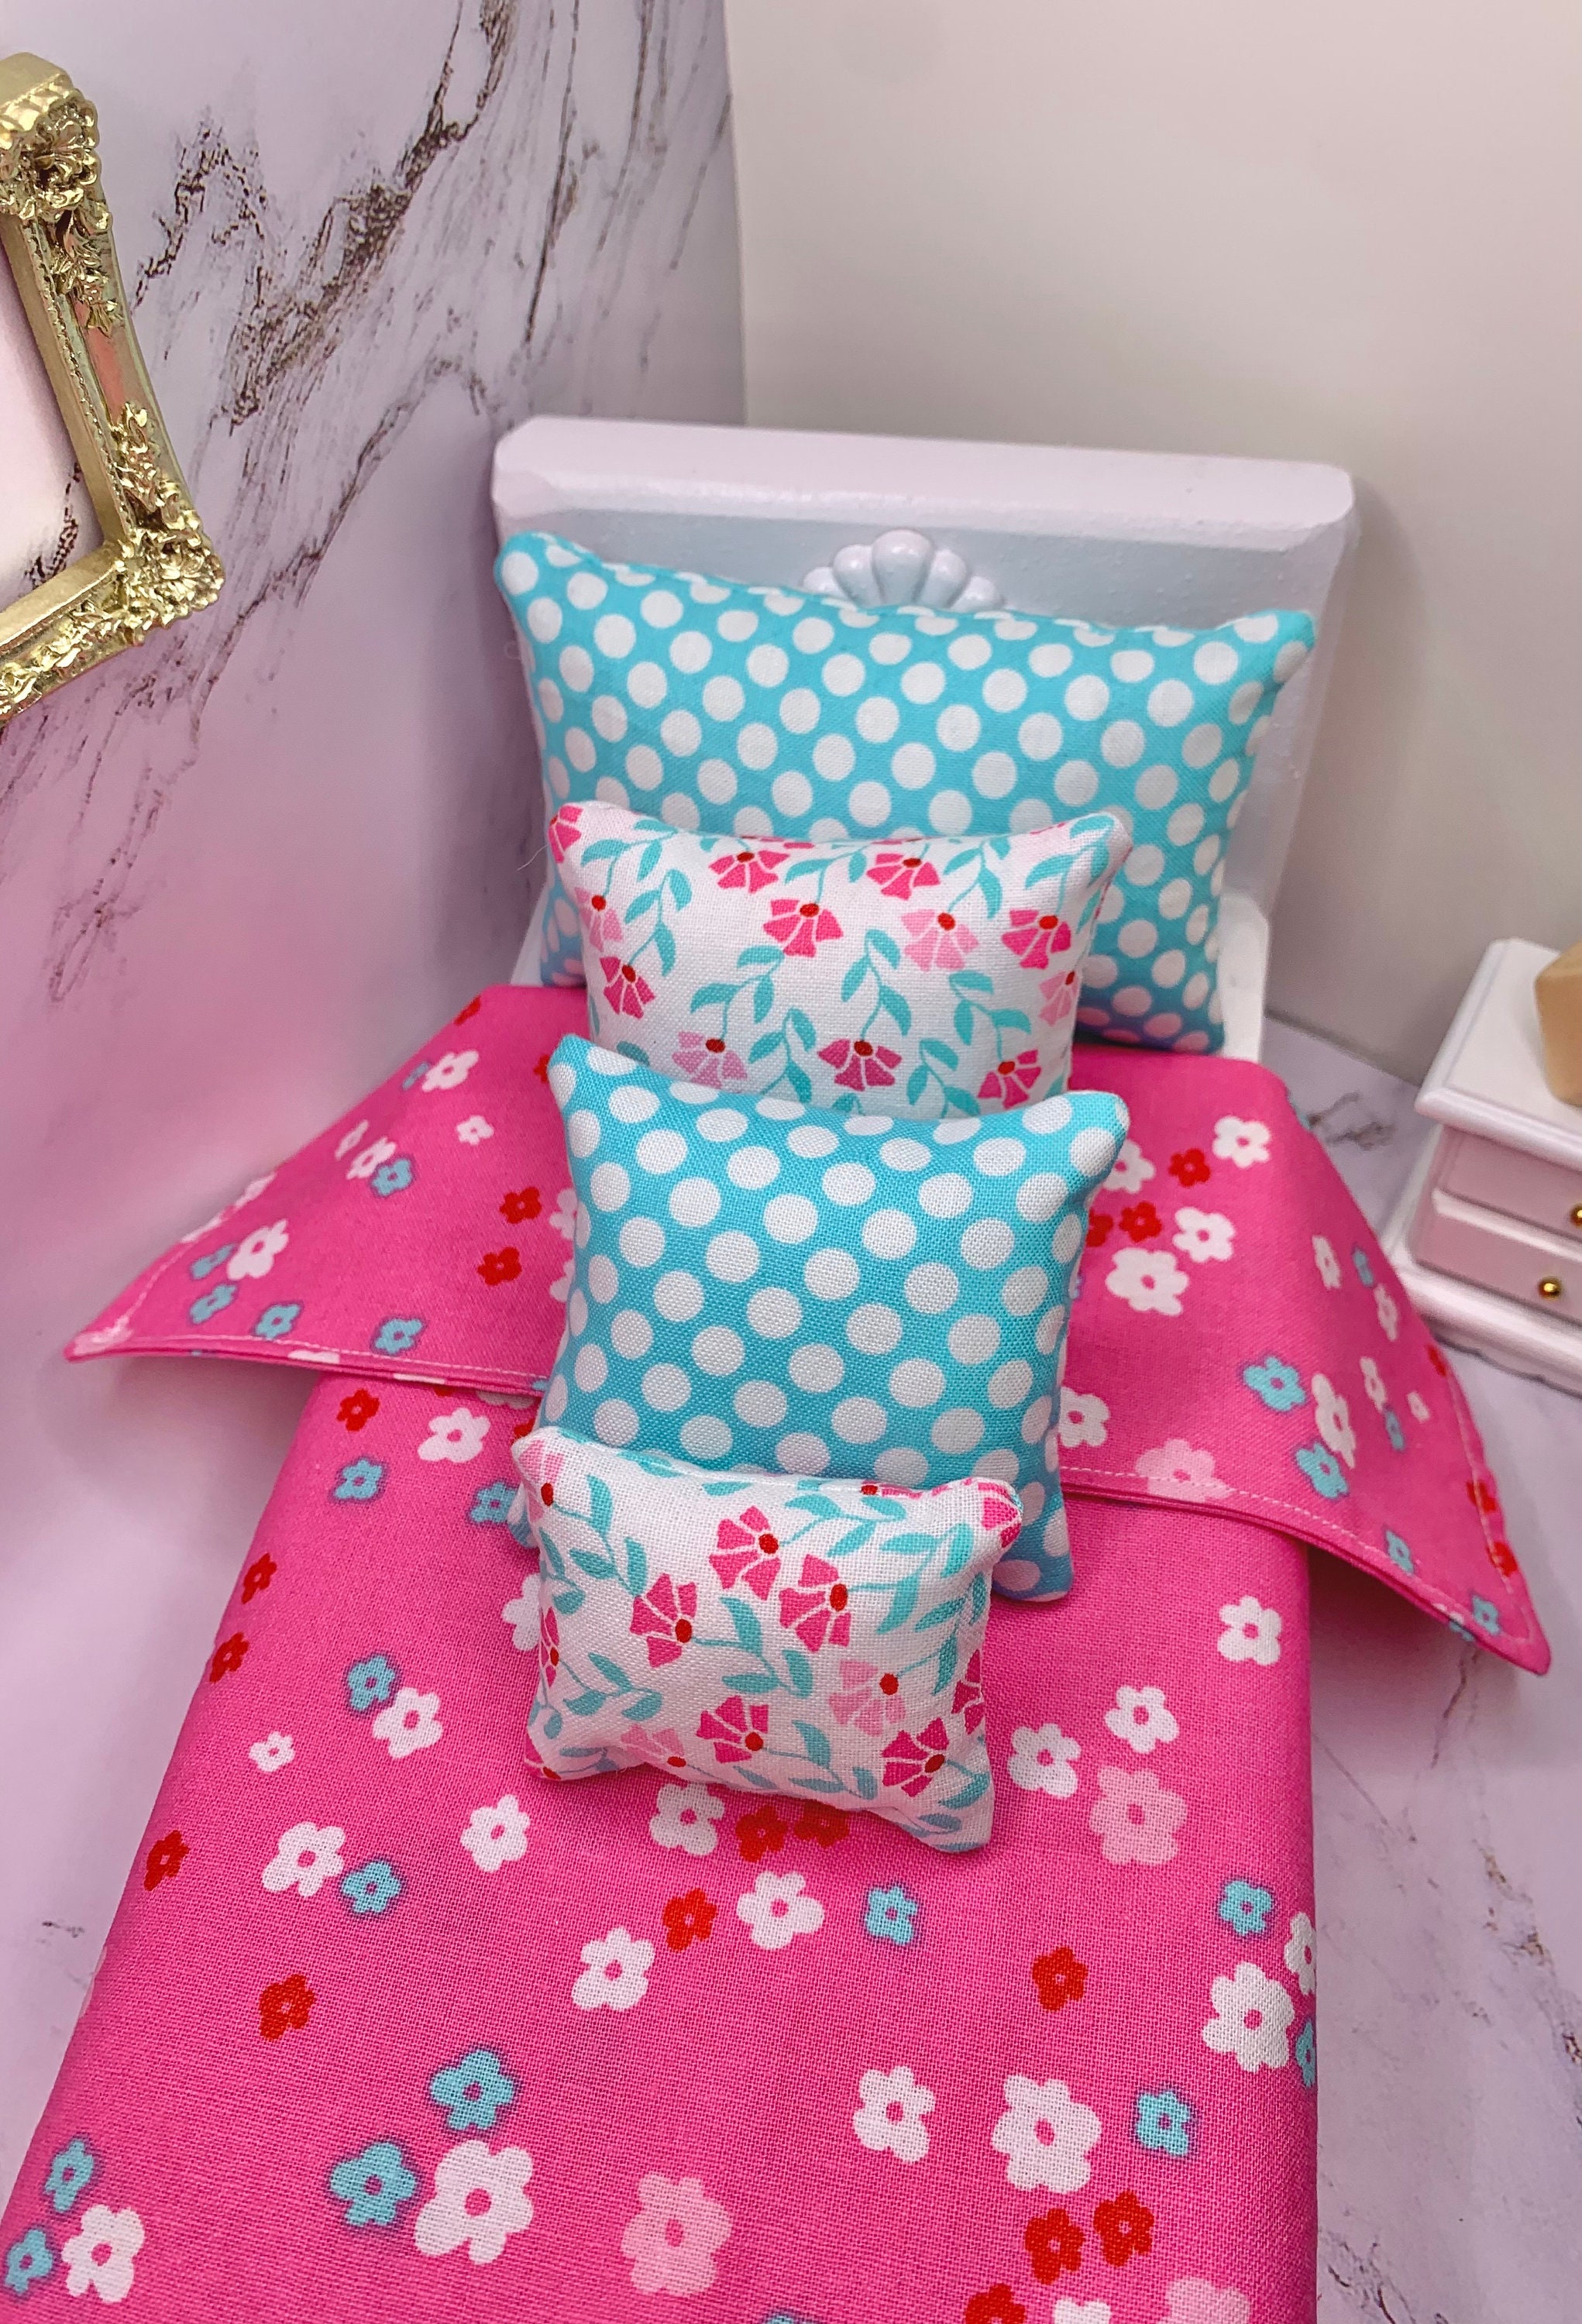 Mixed Color Bedding Set / Barbie Pink + Pastel Pink, Best Stylish Bedding